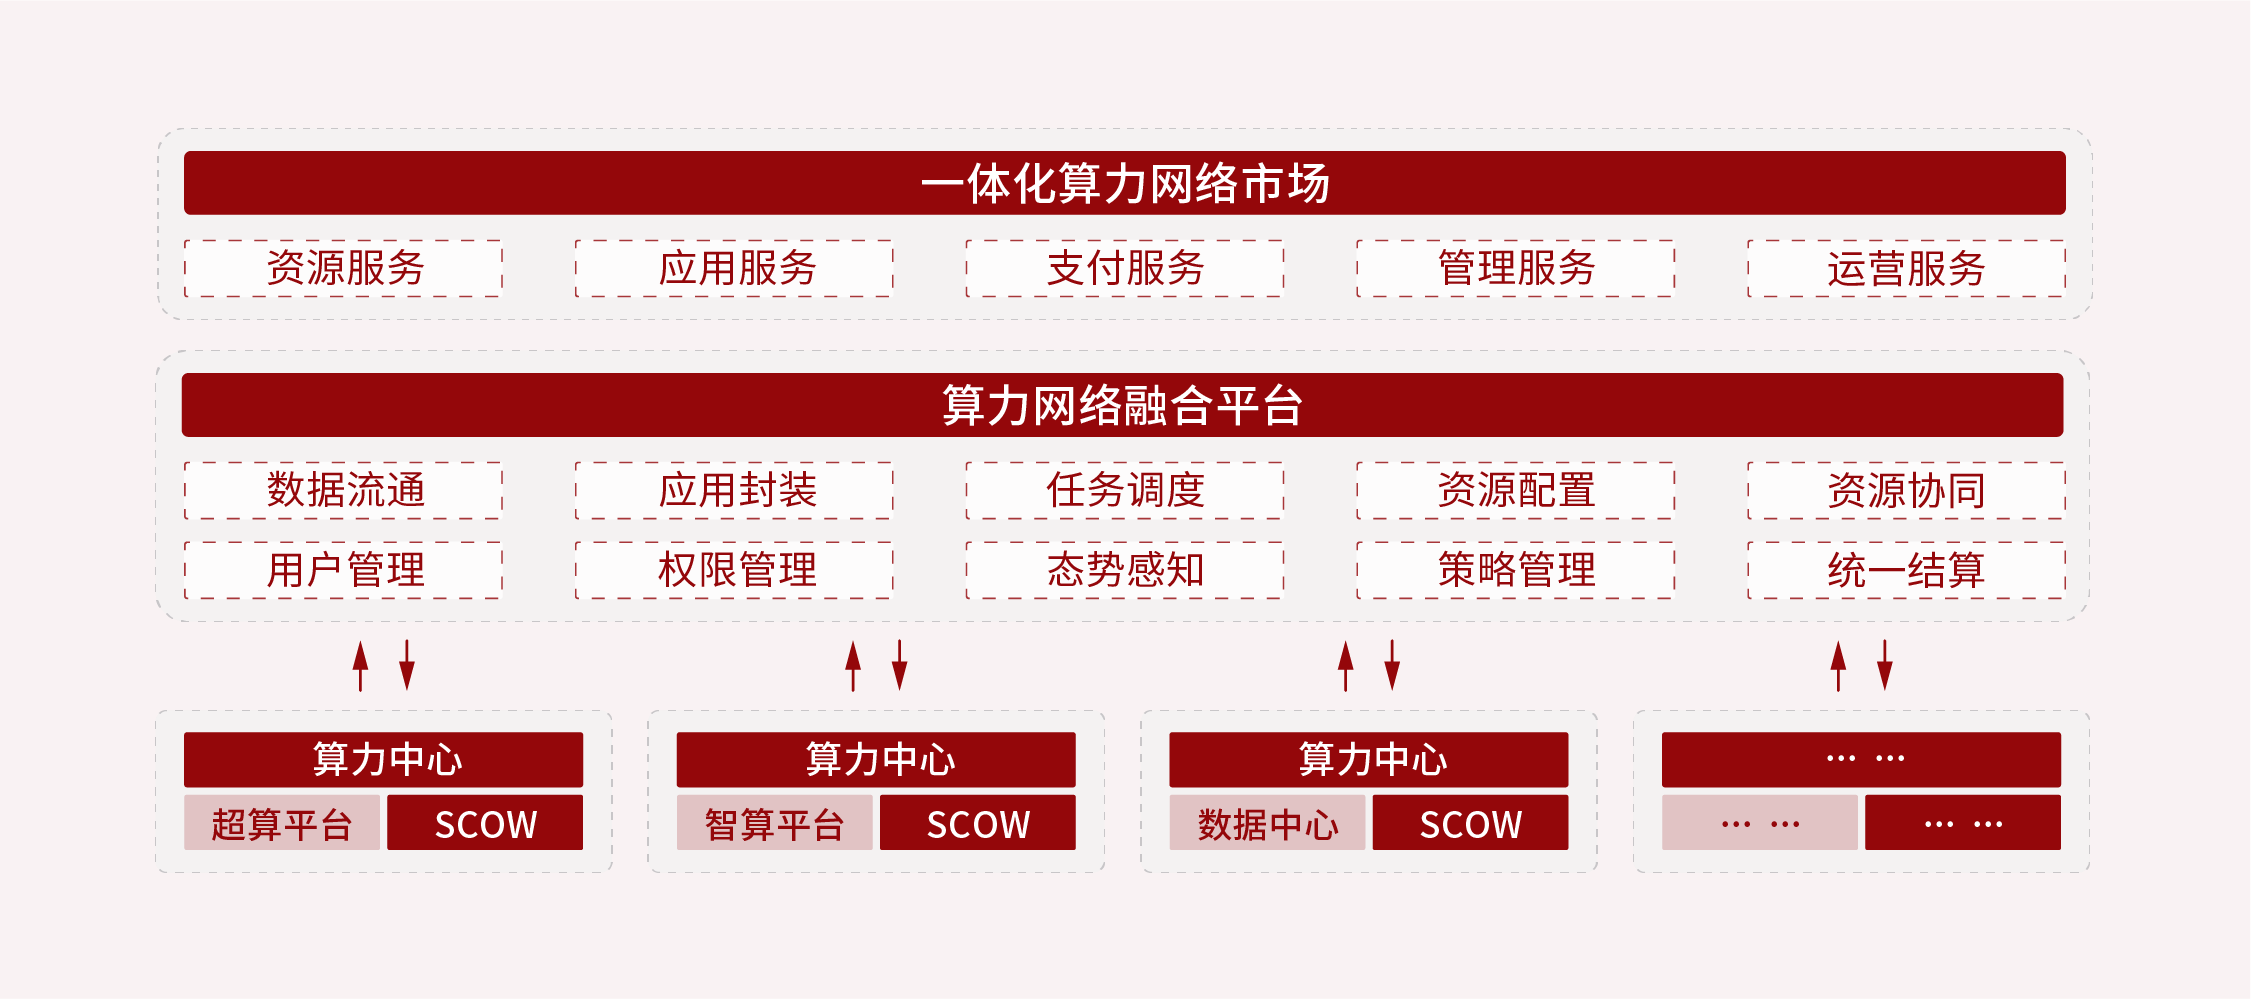 SCOW首次亮相HPC China 2022，以算网融合助力“东数西算”工程发展